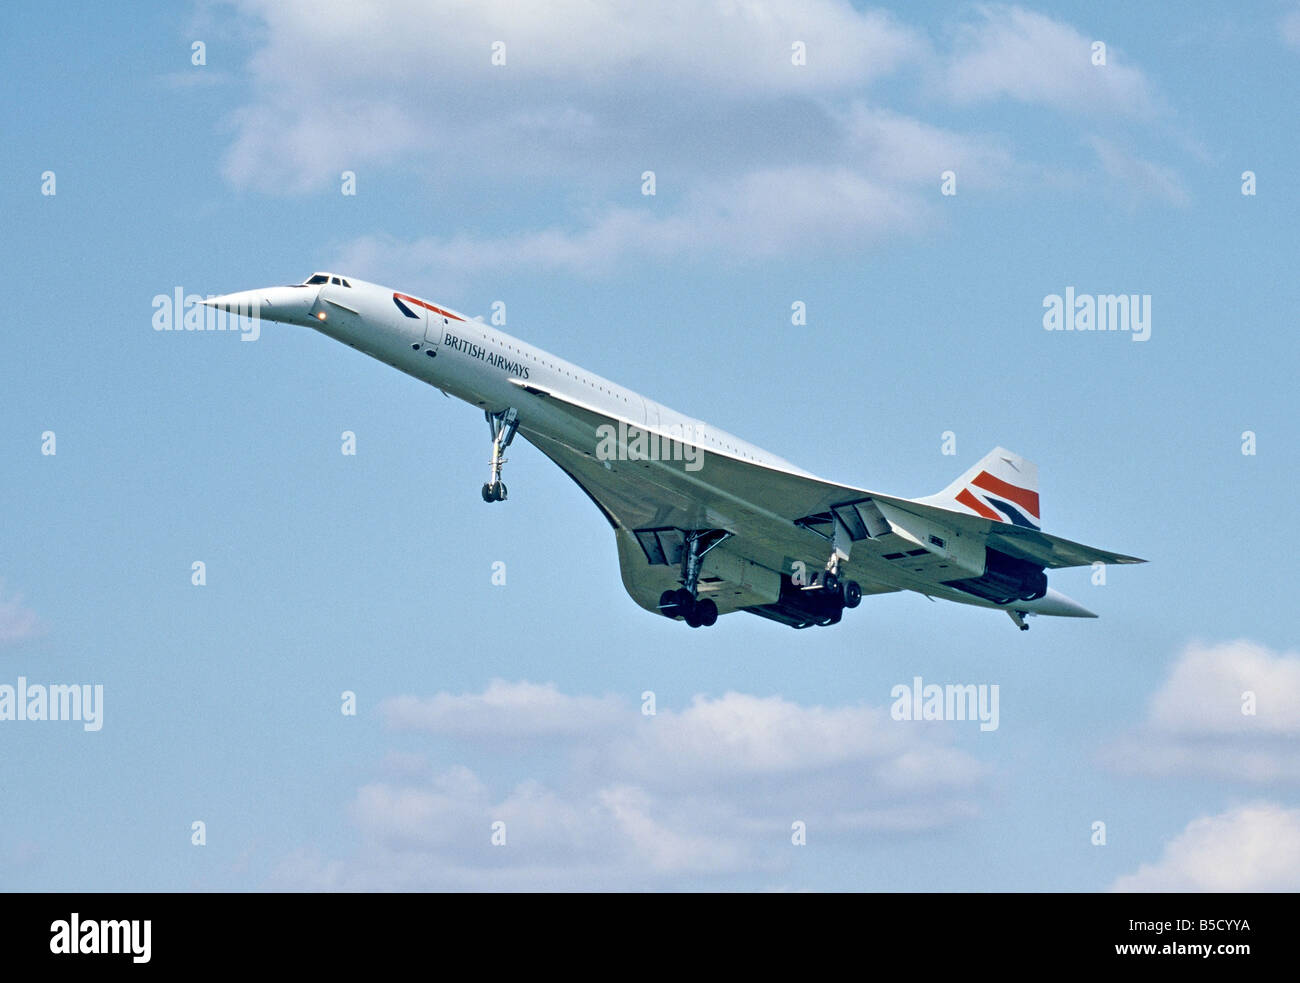 British Airways Aerospatiale Concorde landing at London Heathrow airport Stock Photo